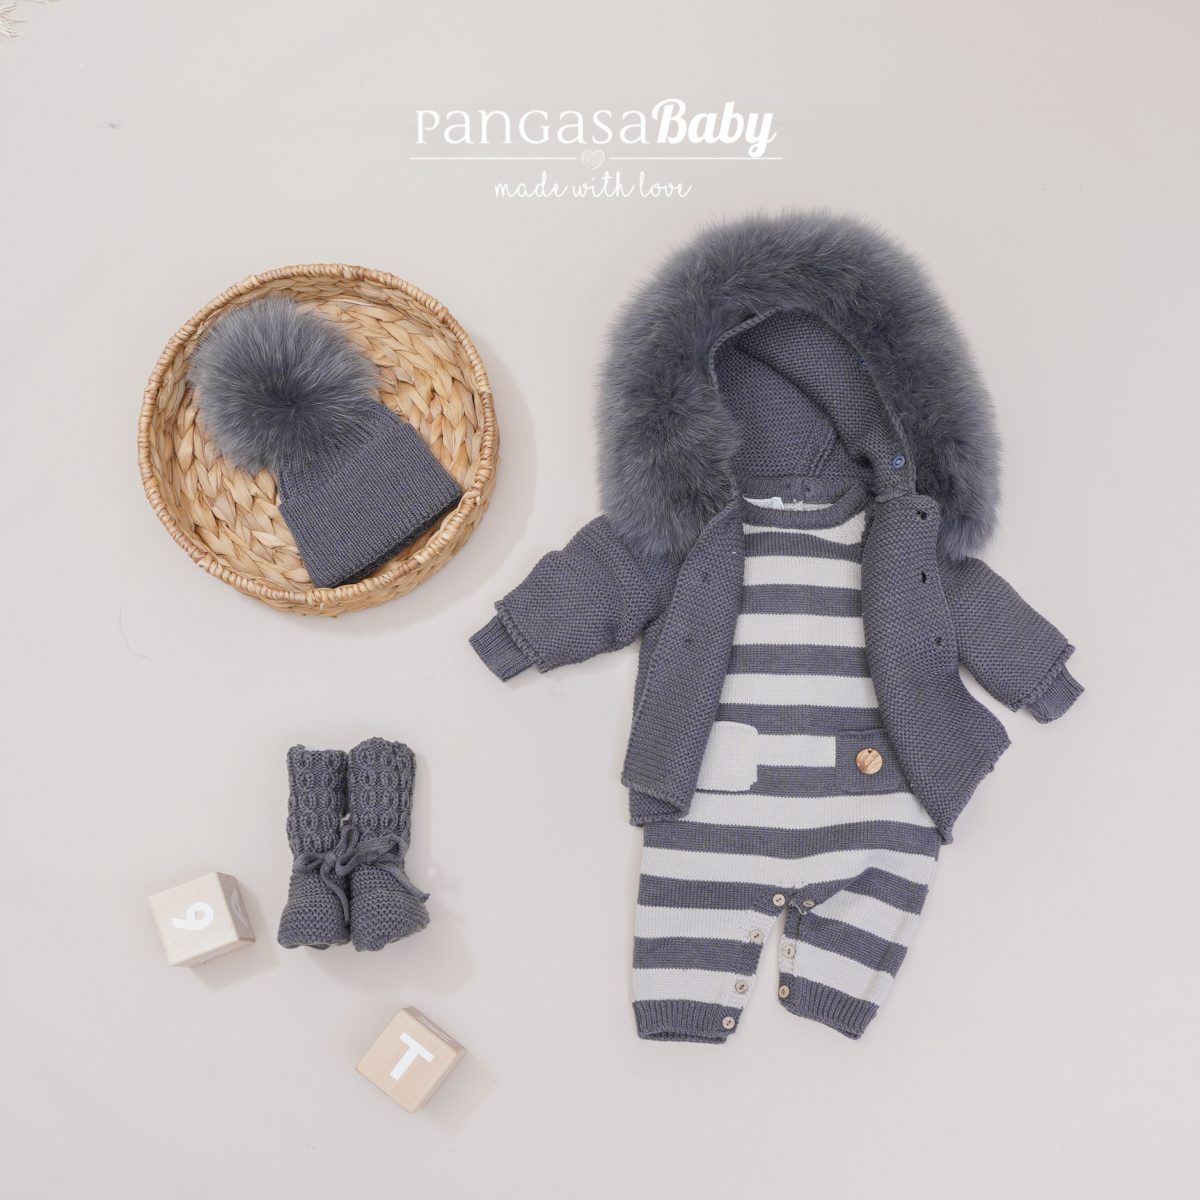 pangasa baby winter collection invierno